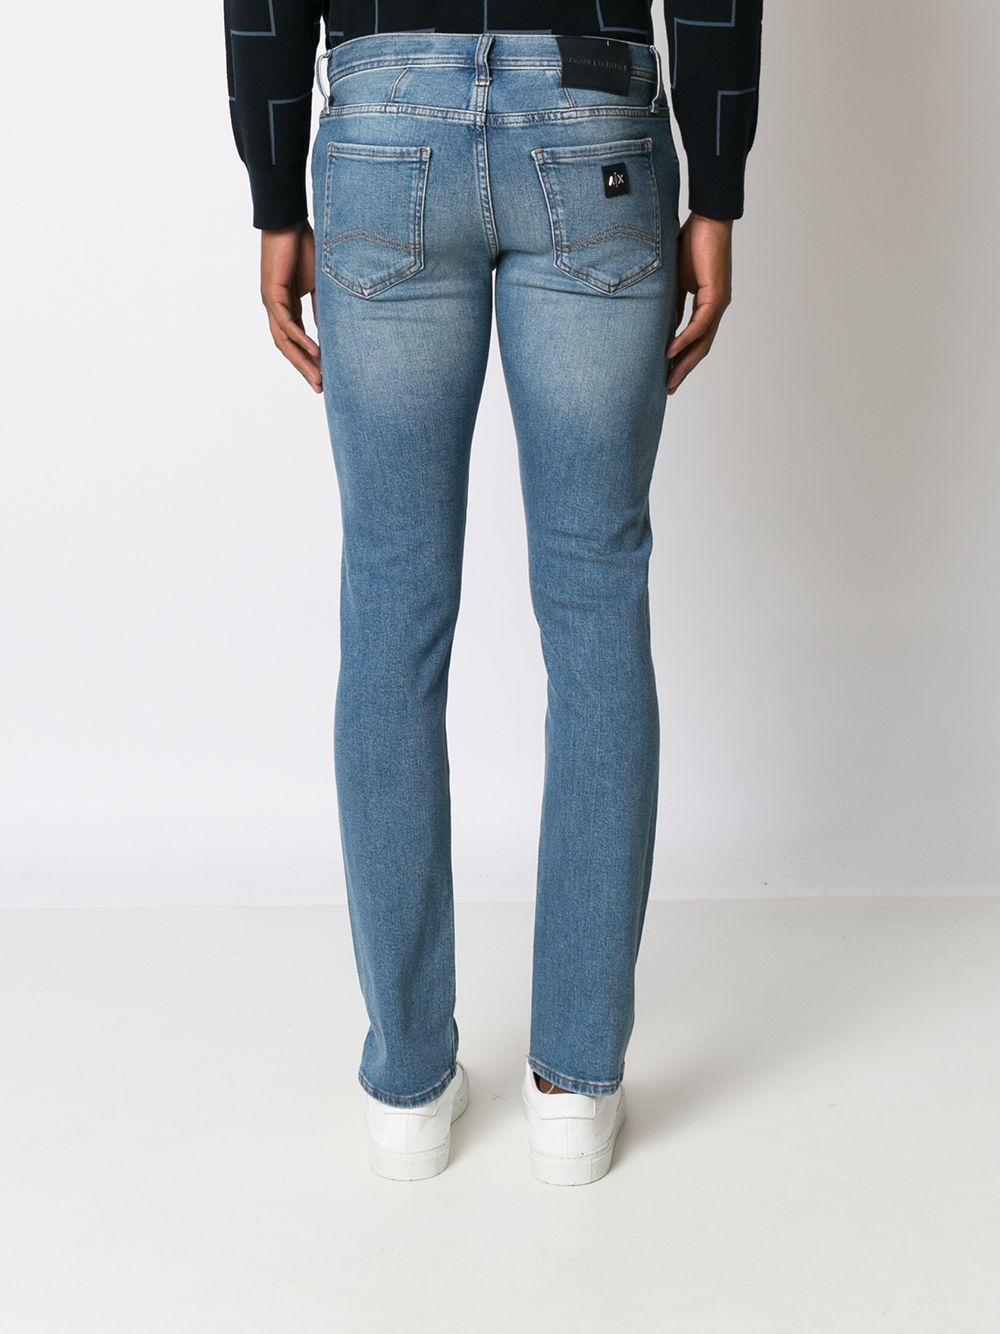 фото Armani exchange джинсы скинни с прорезями